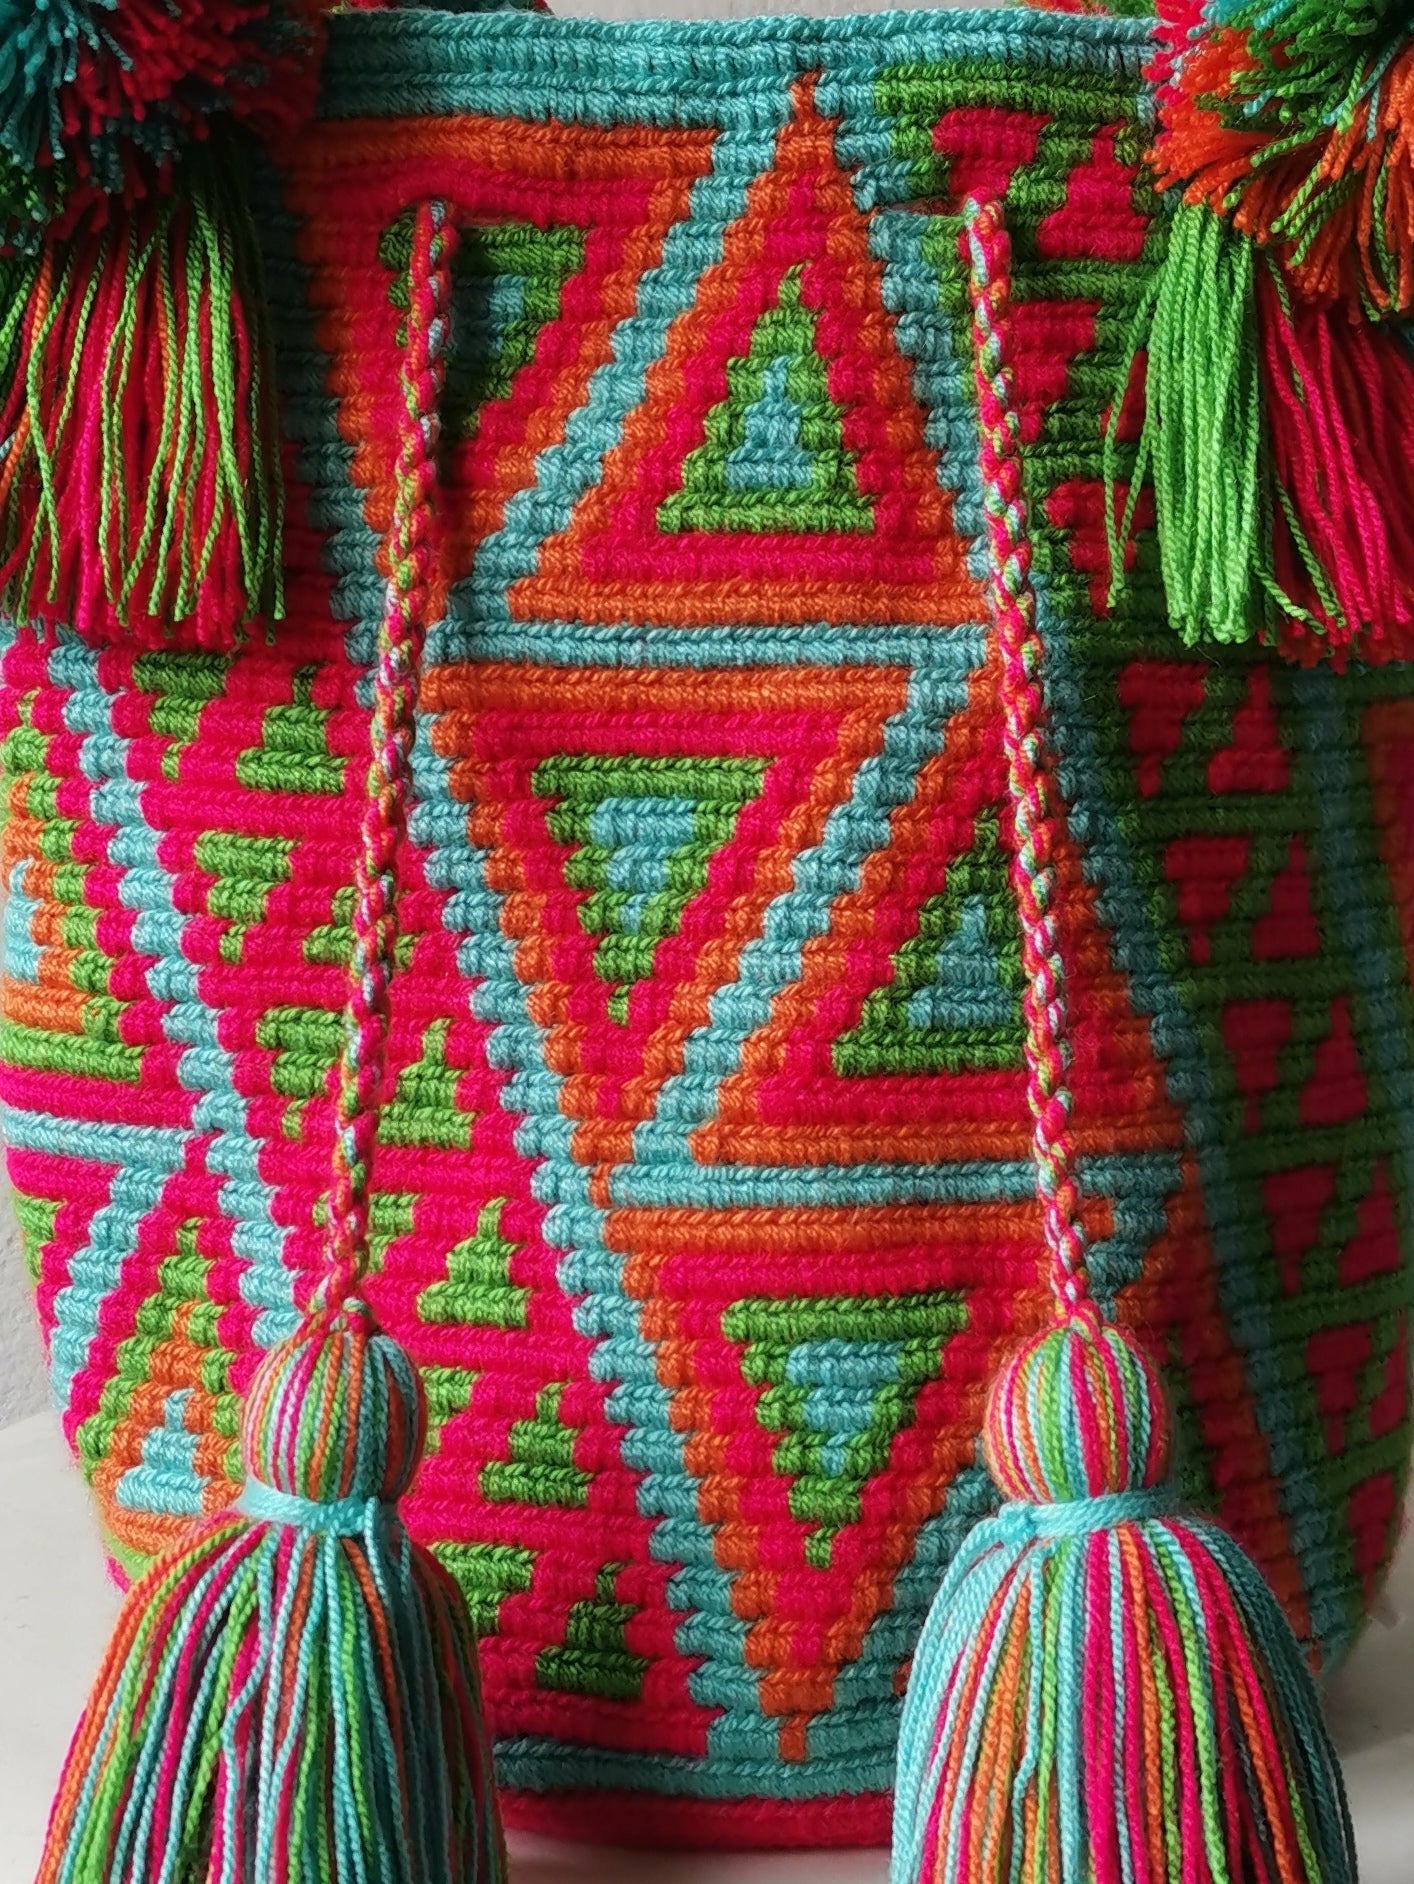 M red-pink and green mochila handbag